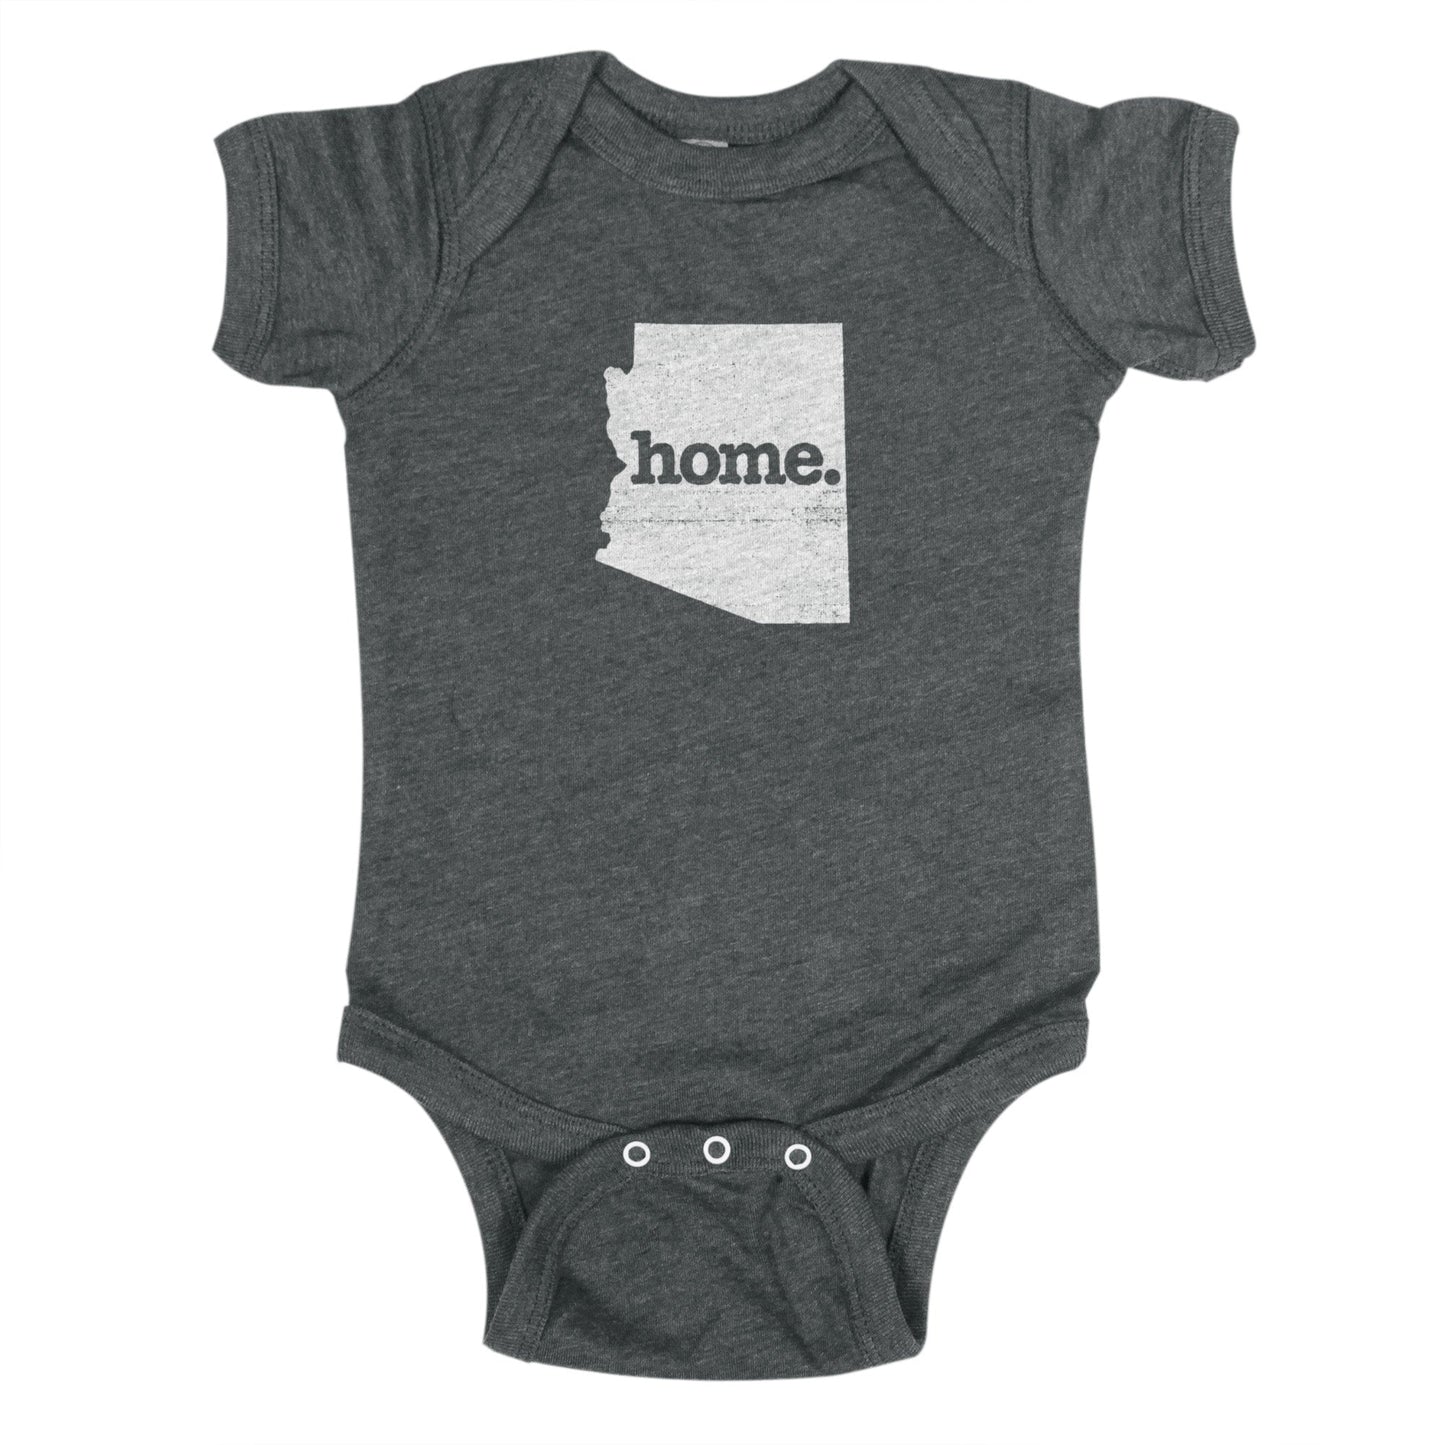 home. Baby Bodysuit - Arizona